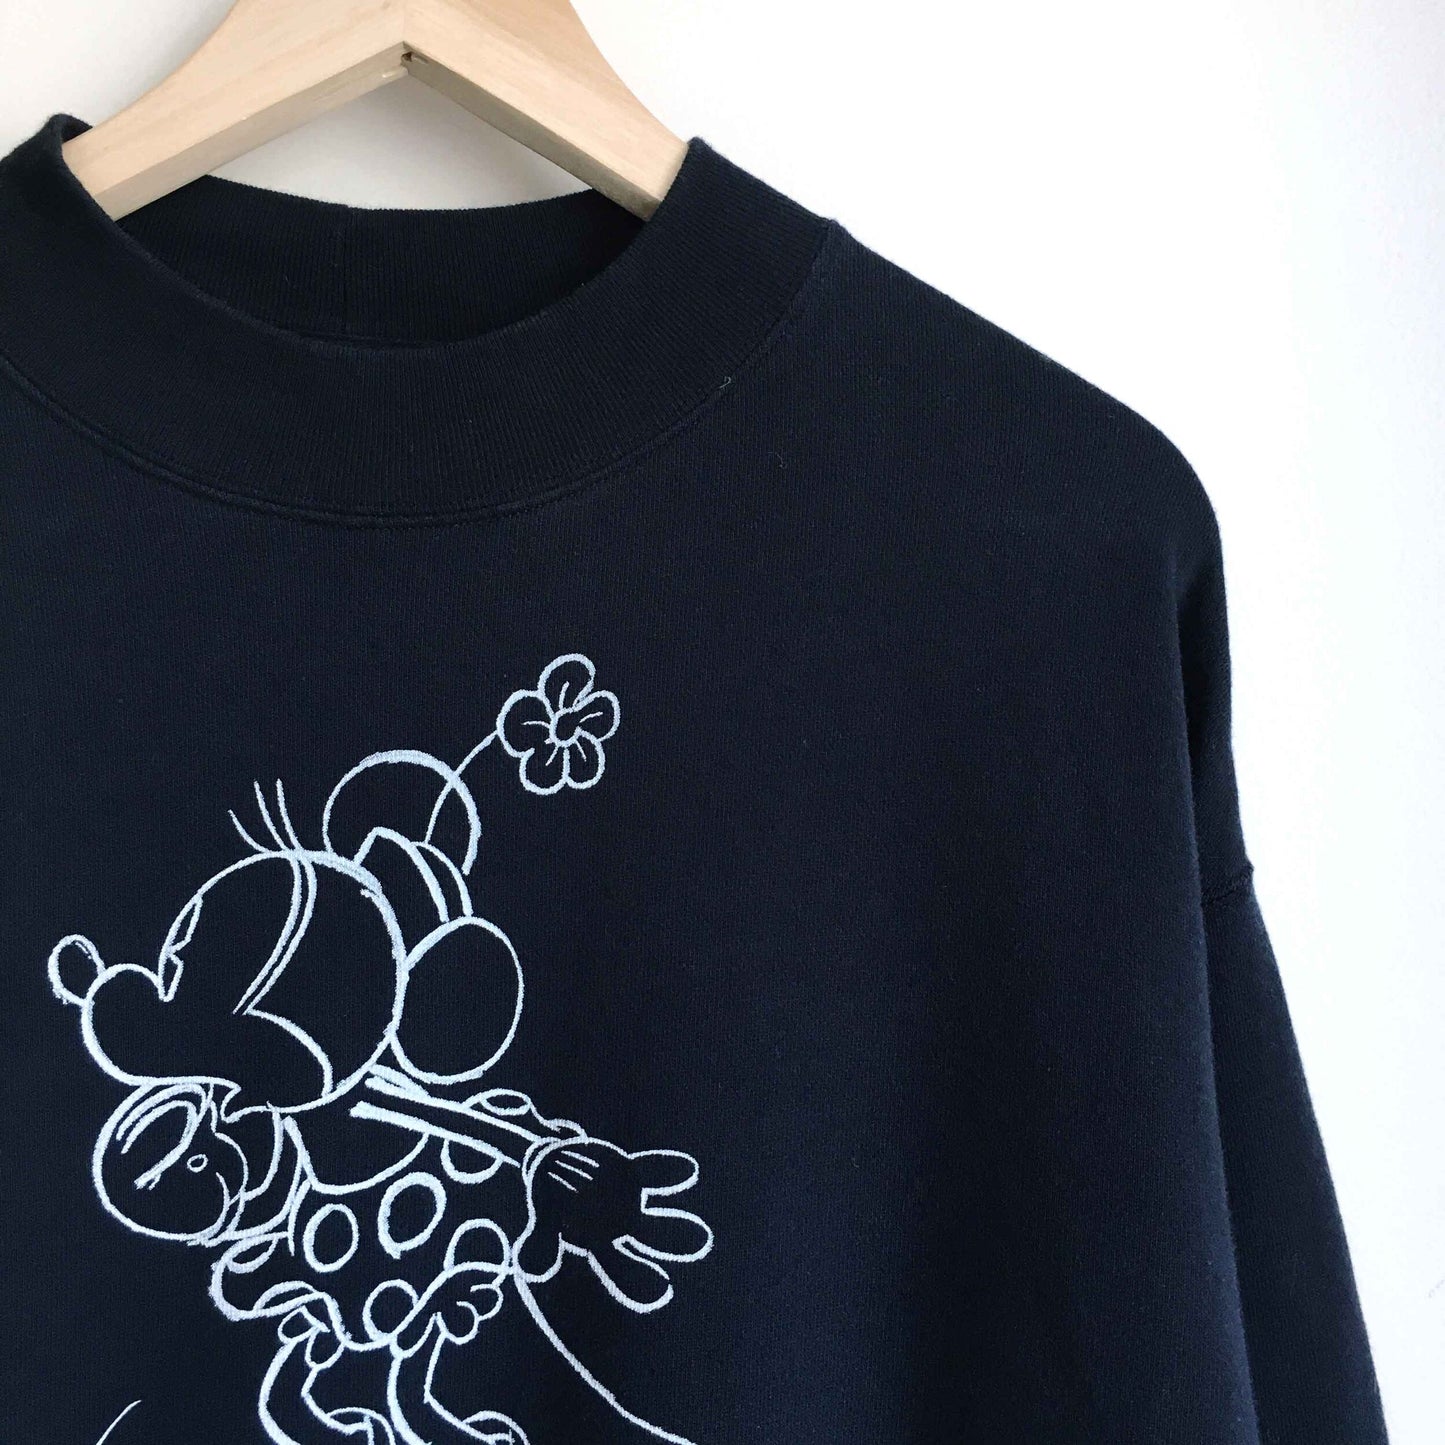 Uniqlo Minnie Mouse Heritage sweatshirt dress - size Large